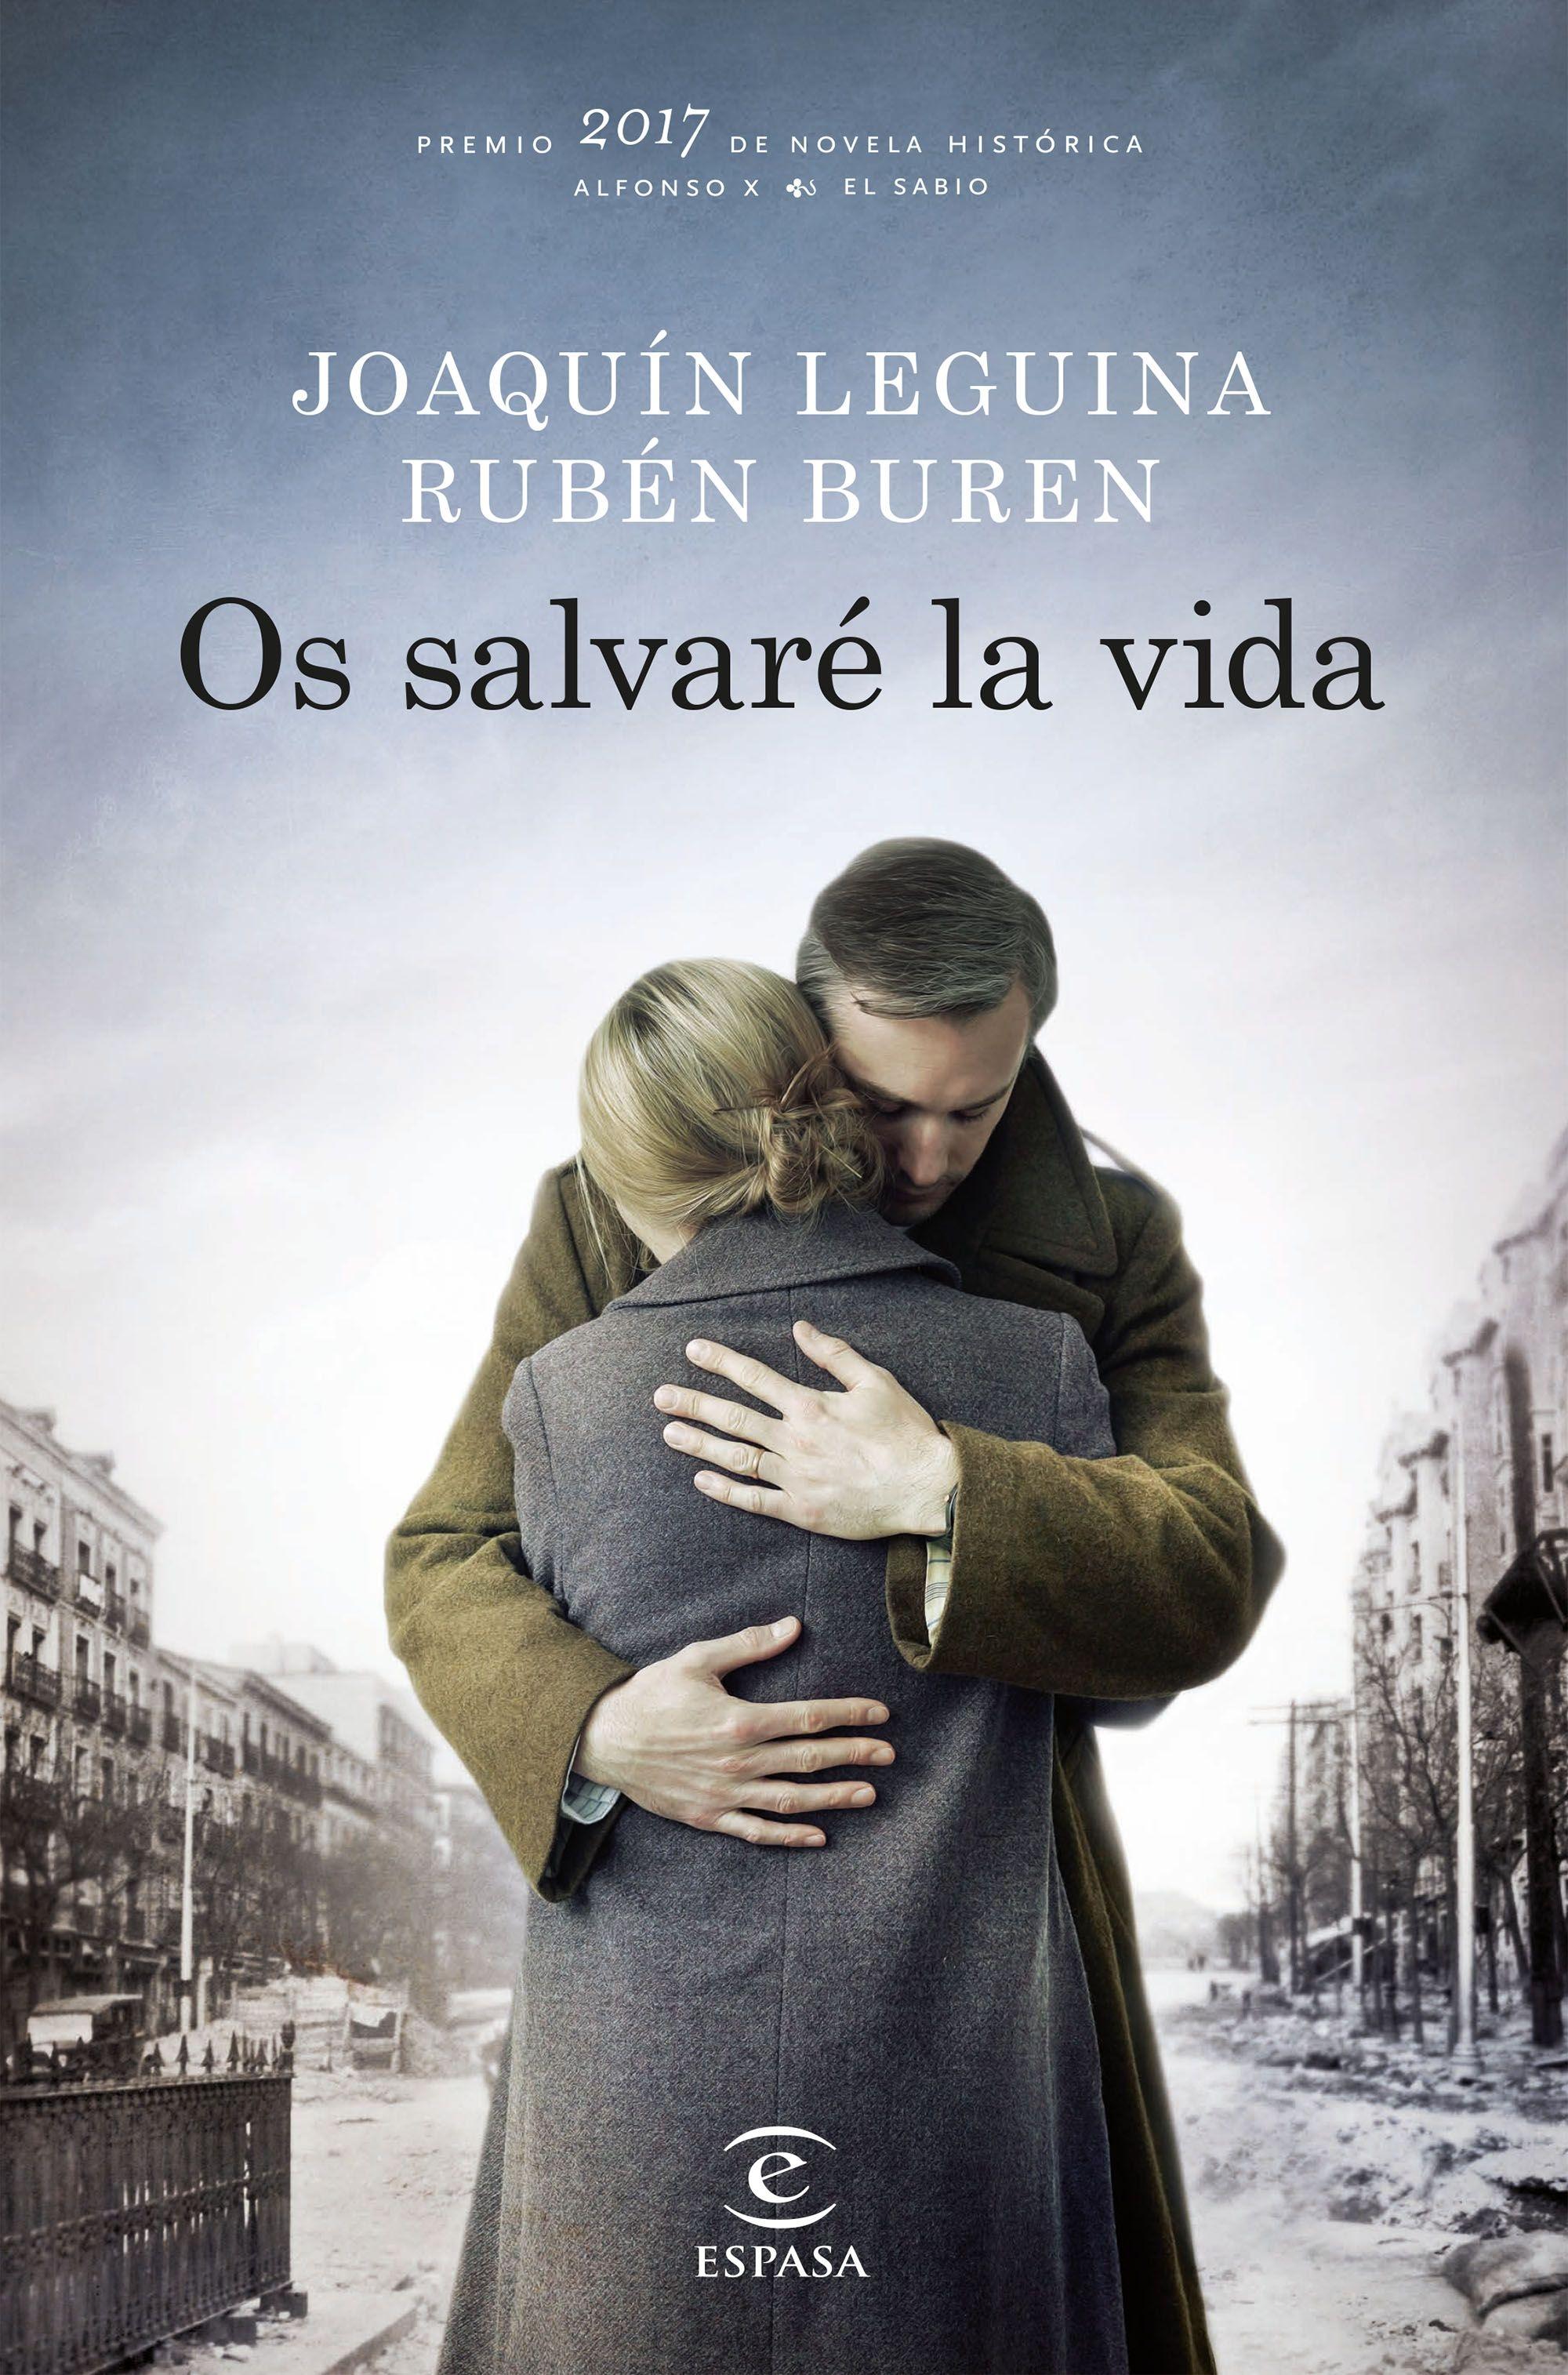 Os salvaré la vida "Premio 2017 de Novela Histórica Alfonso X El Sabio". 